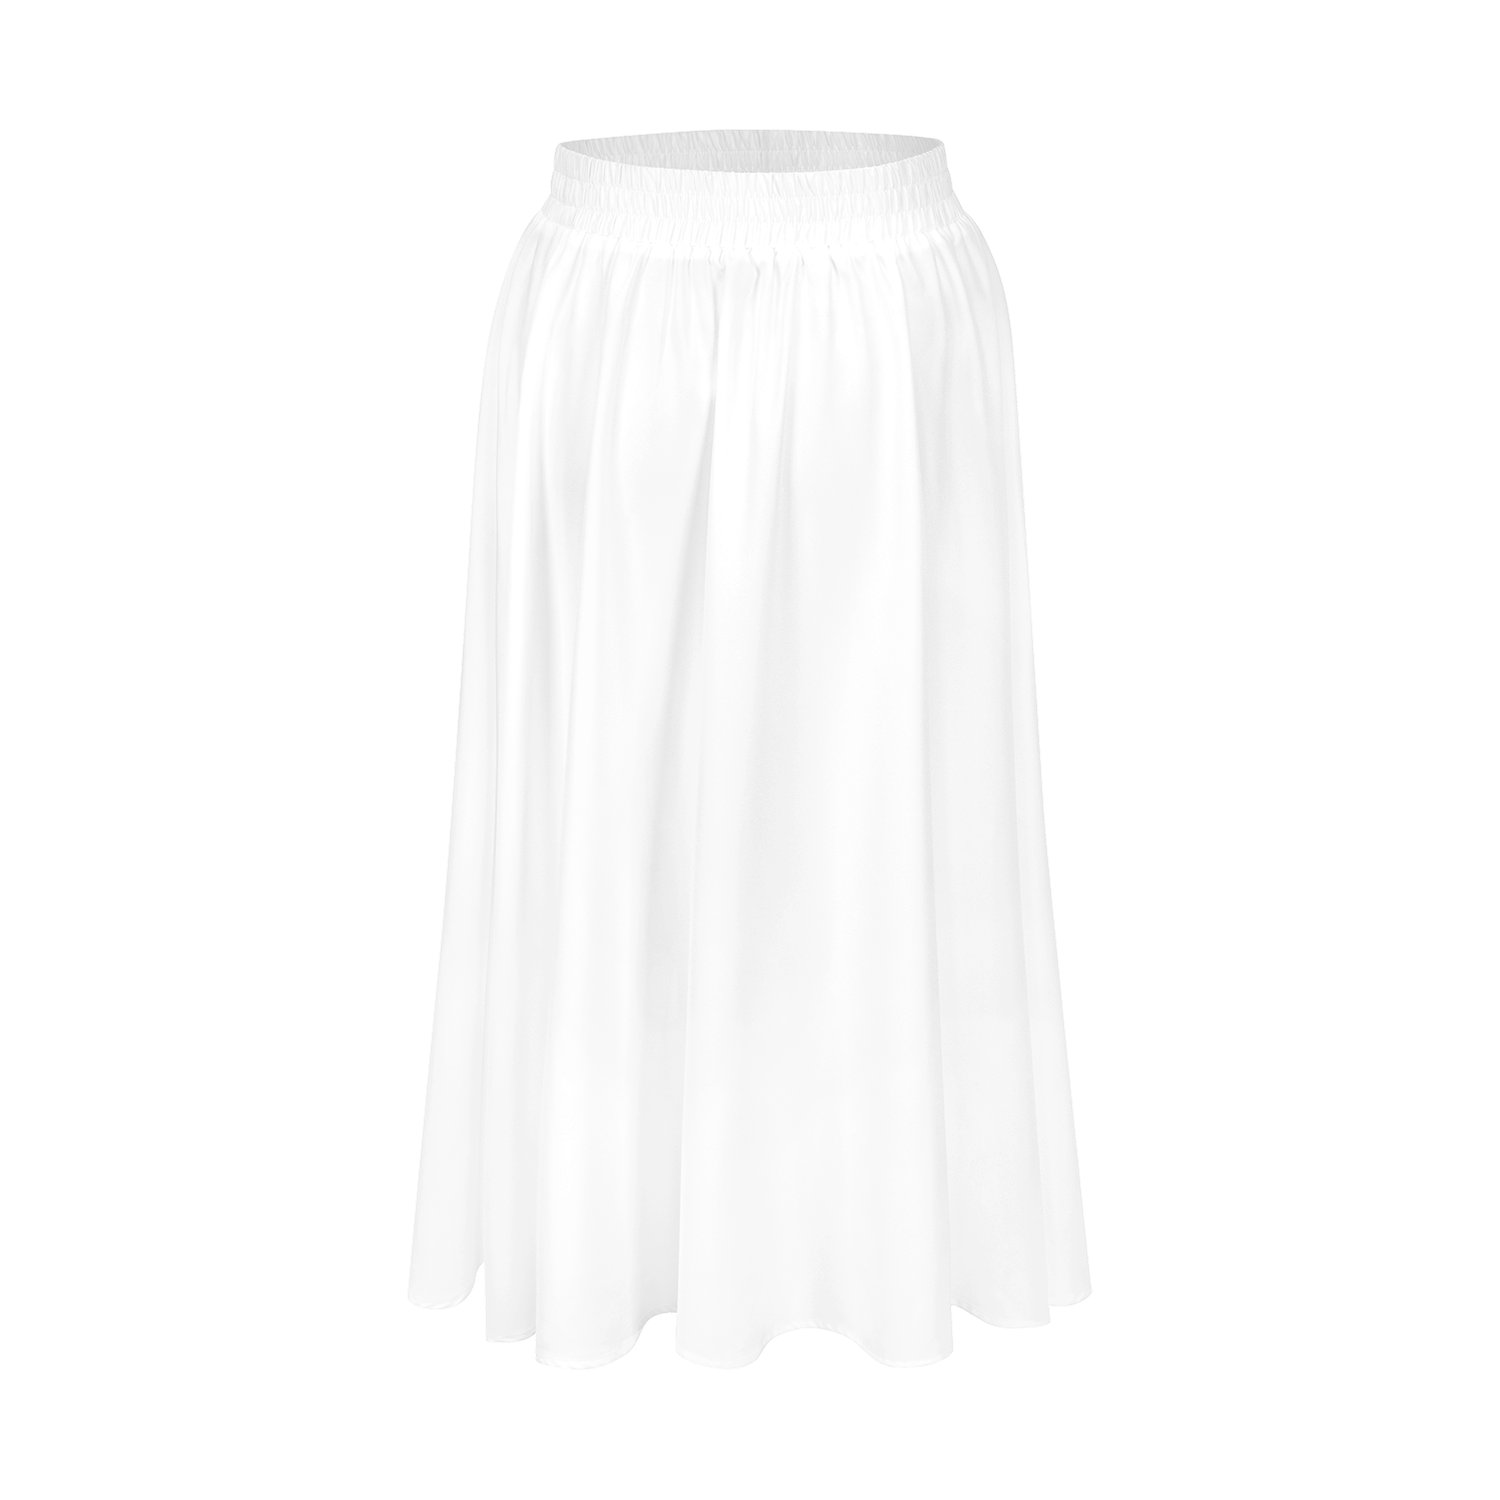 Print On Demand All-Over Print Women's Flared Midi Skirt-3